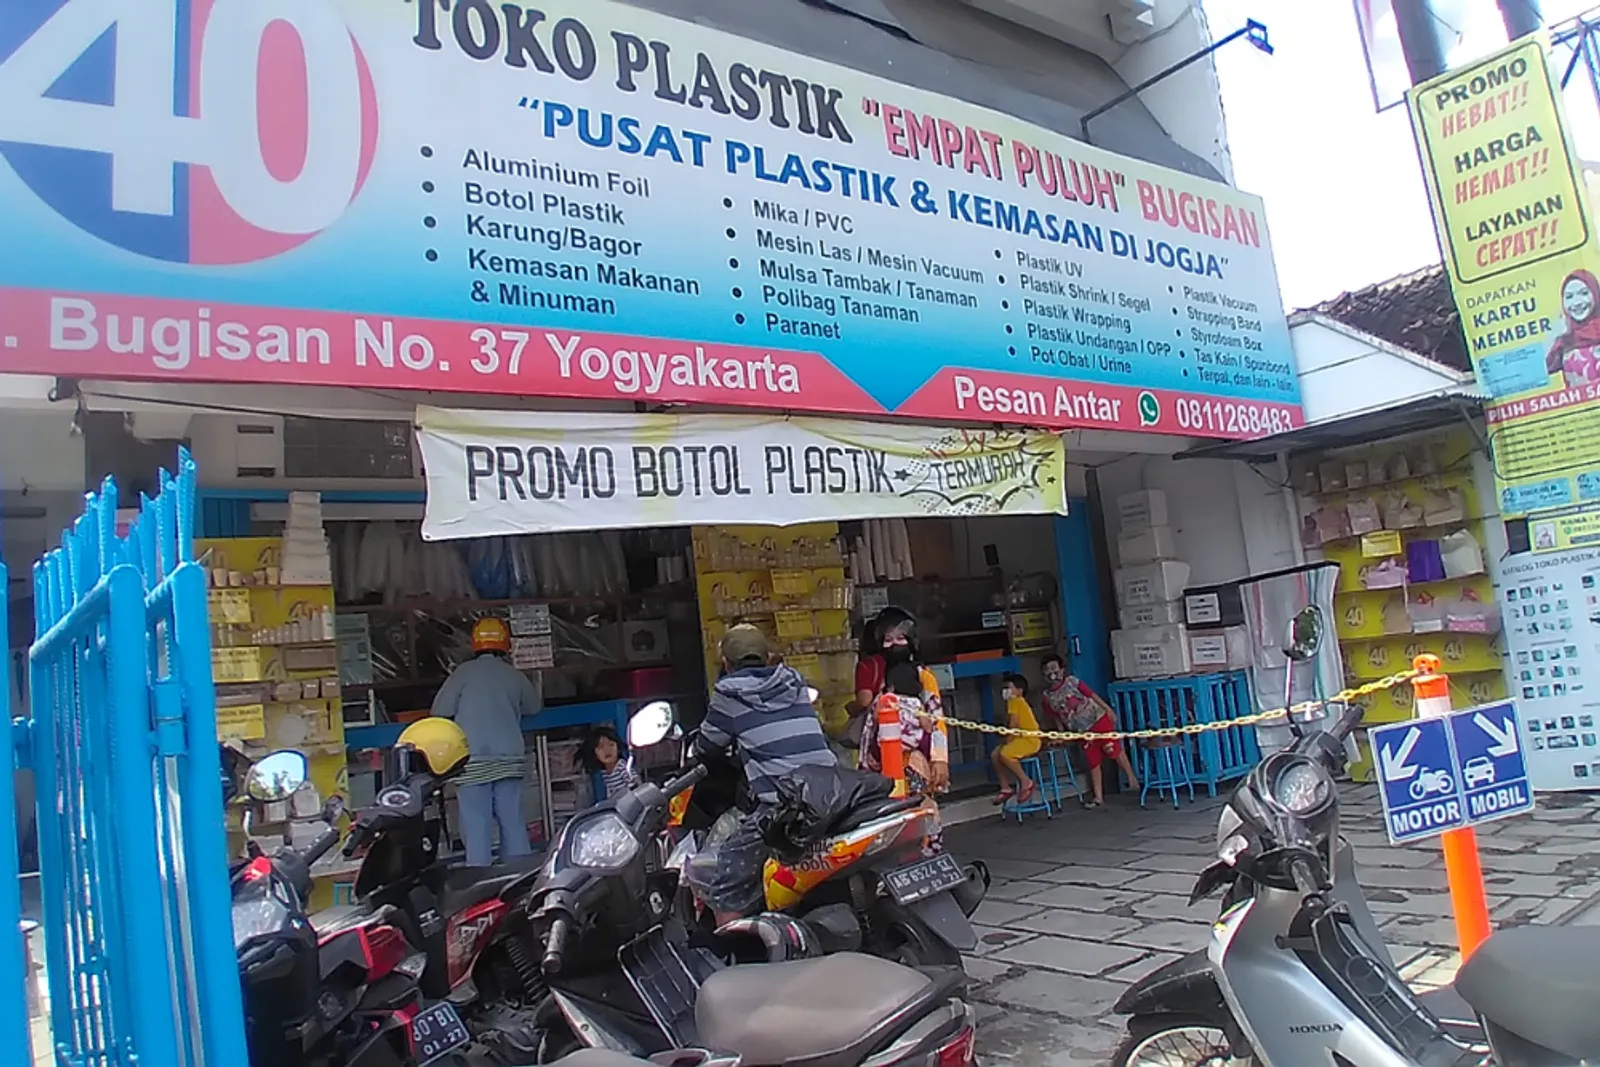 10 Toko Plastik Murah dan Lengkap di Jogja, Jadi Andalan!